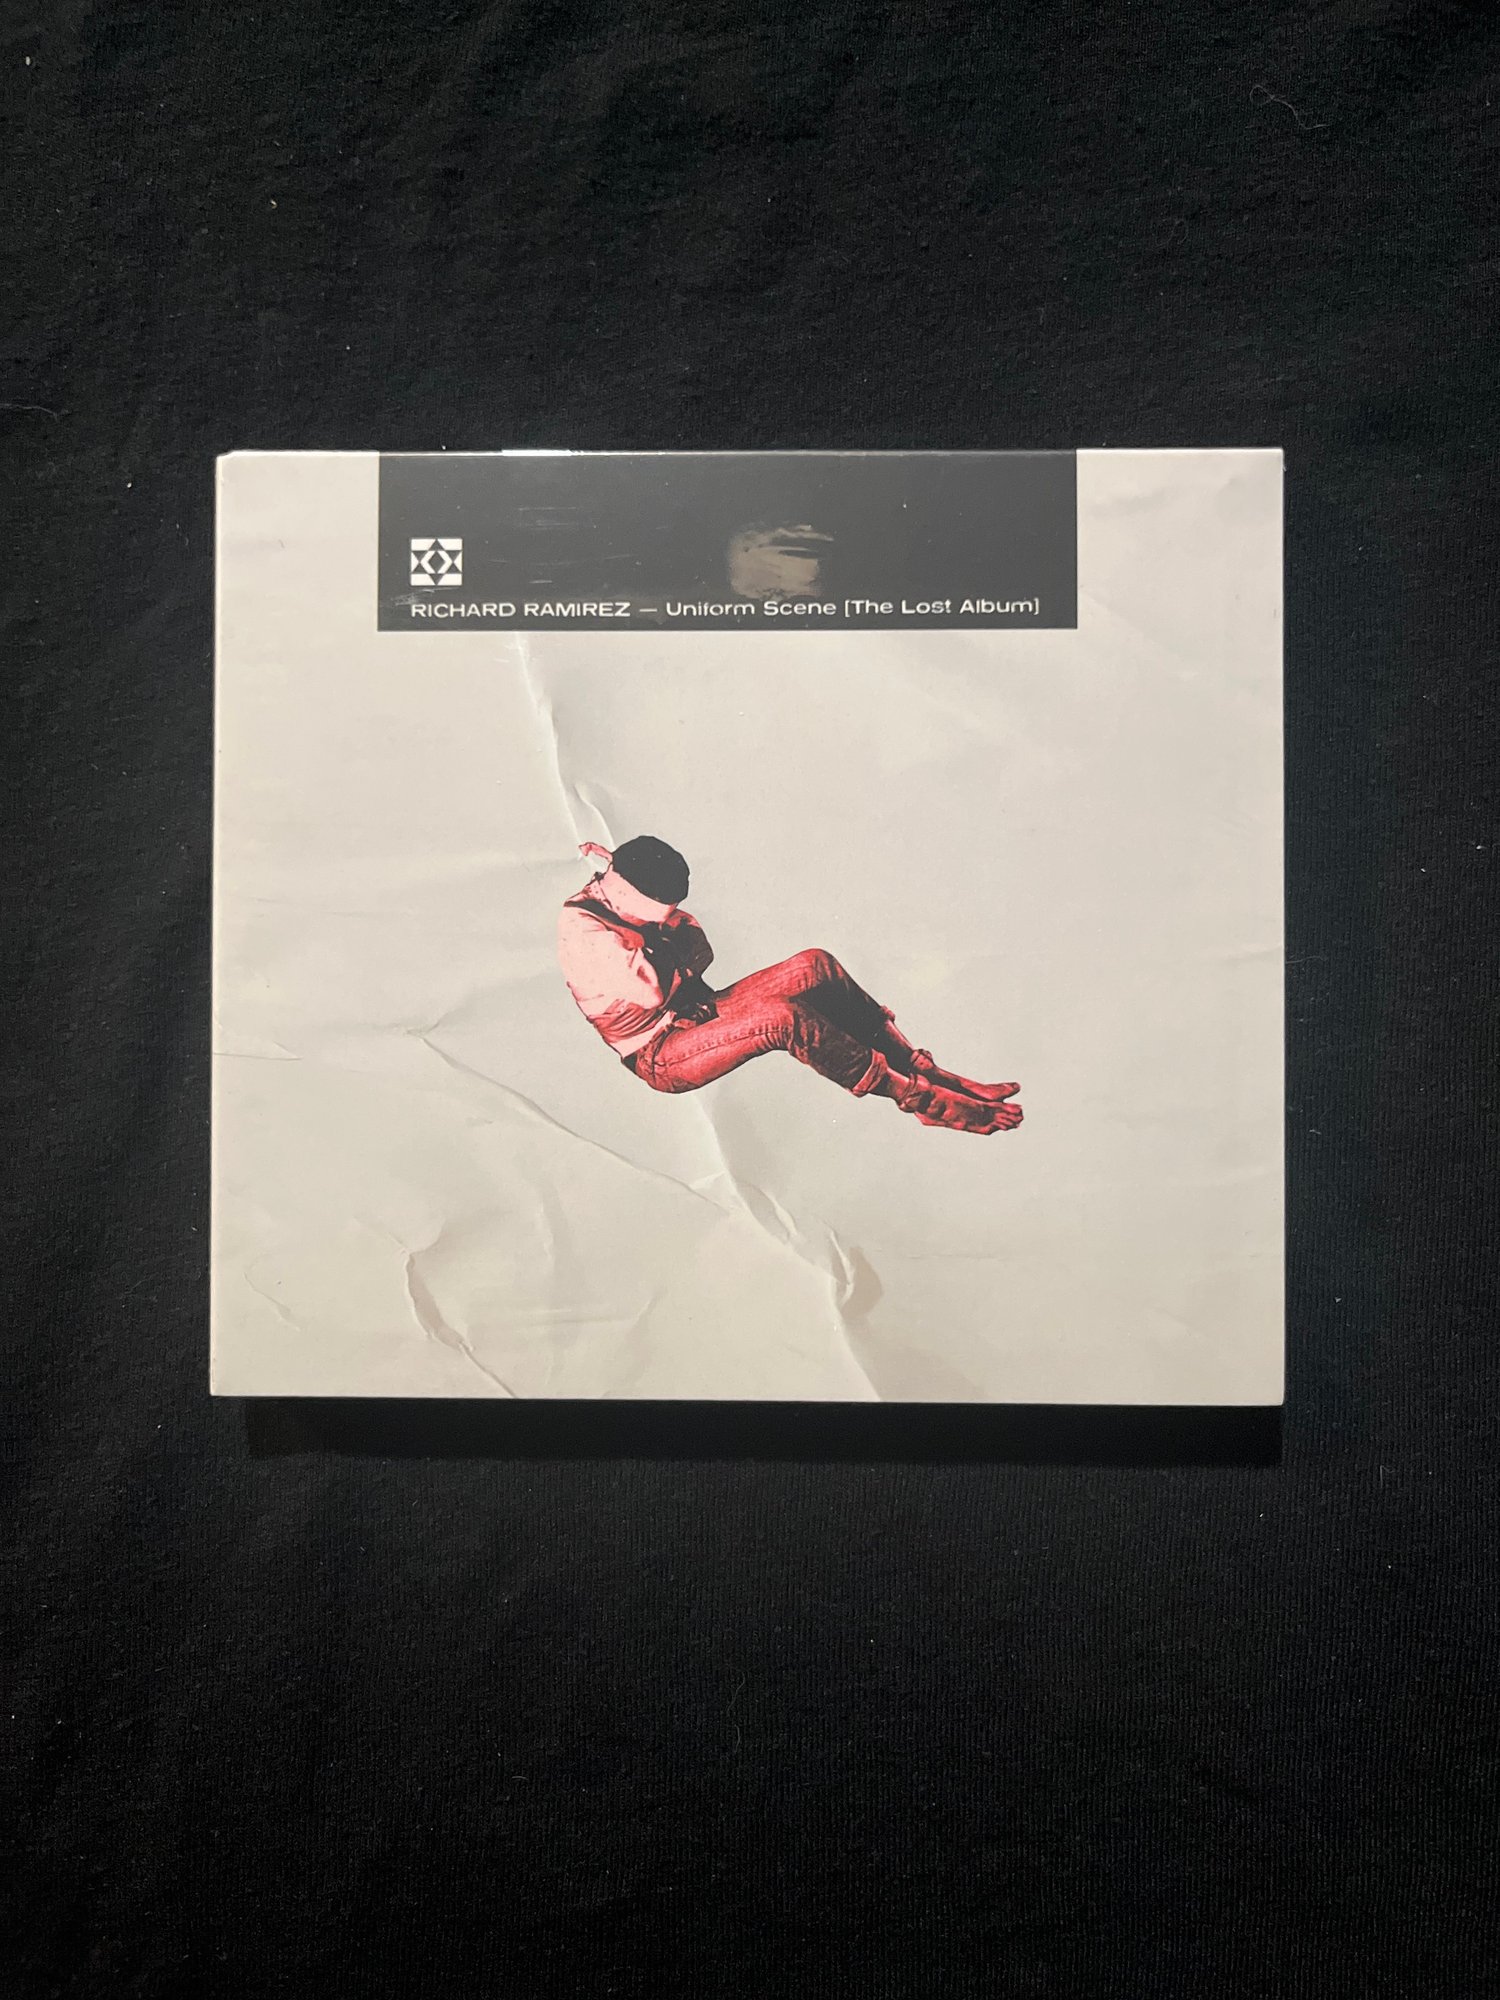 Richard Ramirez - Uniform Scene (The Lost Album) 2xCD (OEC)